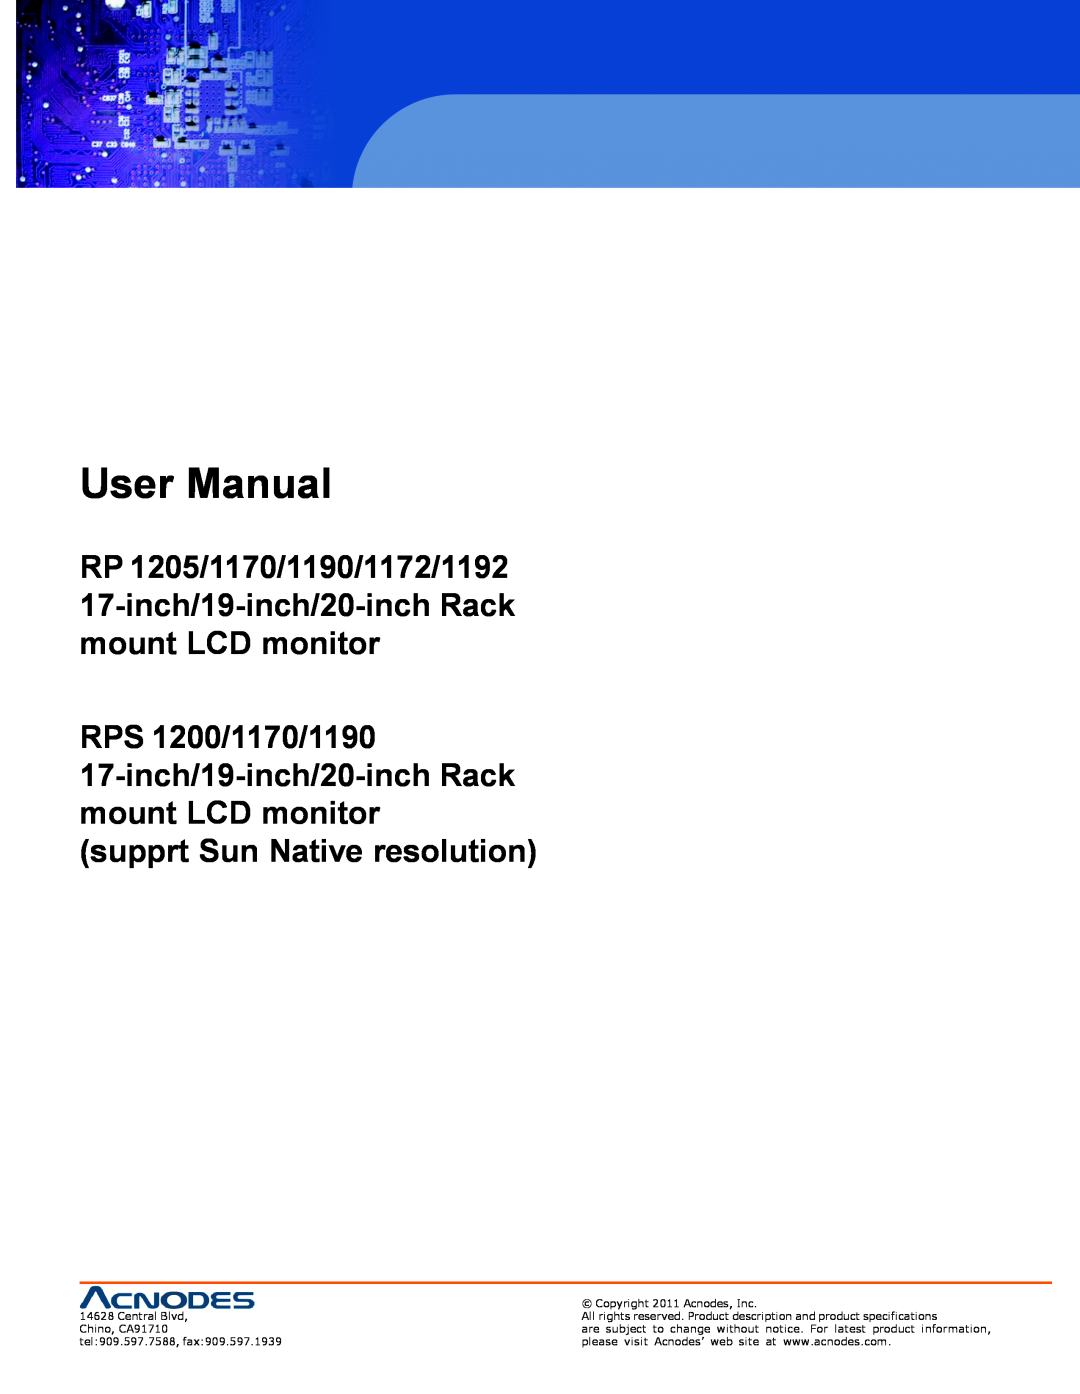 Acnodes RPS 1200, RP 1205, RP 1170 user manual User Manual 